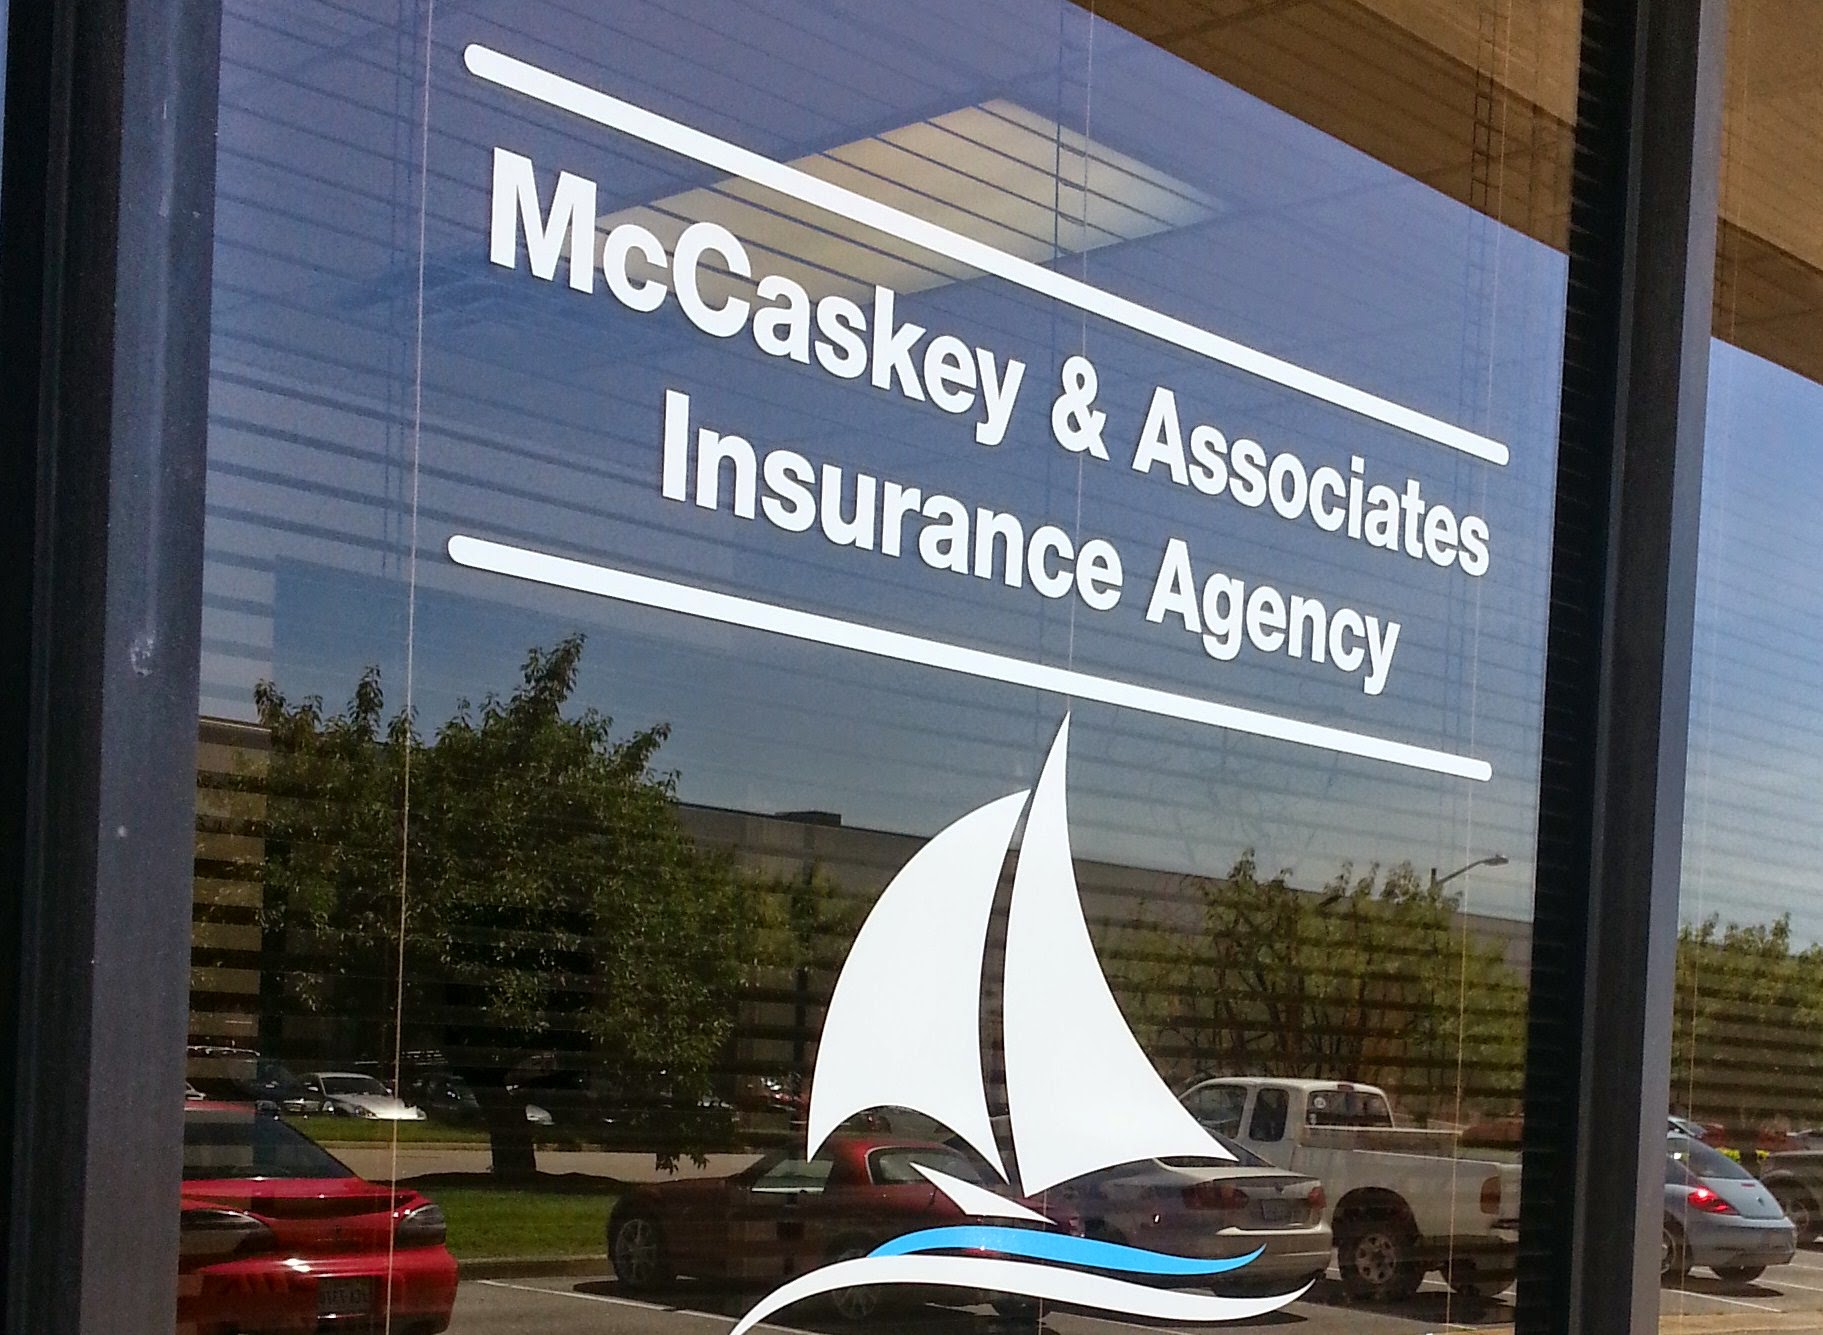 McCaskey & Associates Insurance Agency